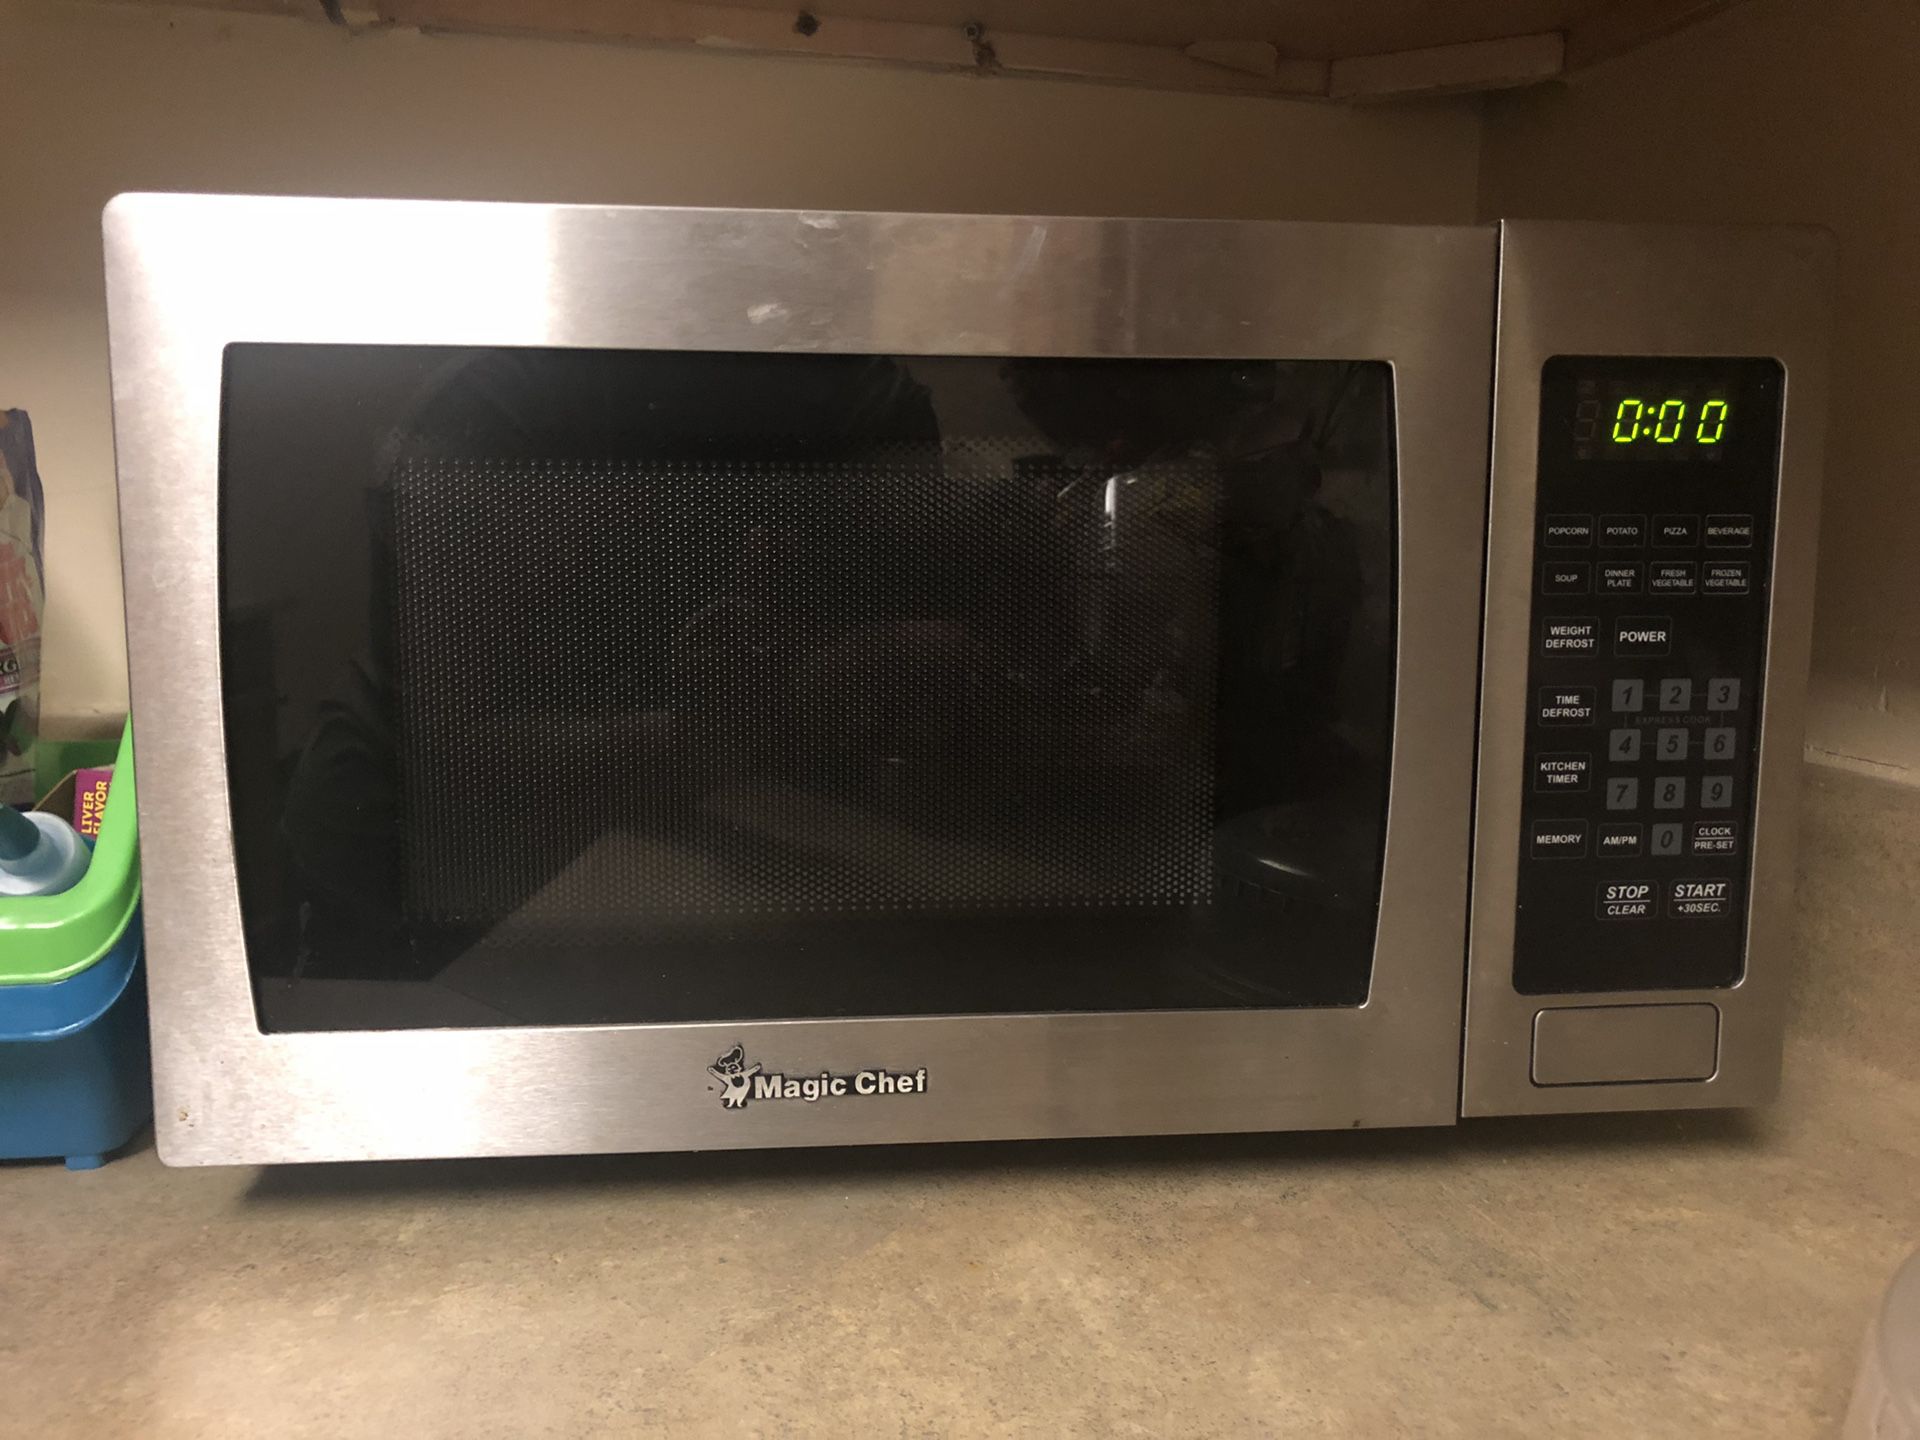 Microwave works but light needs replacing